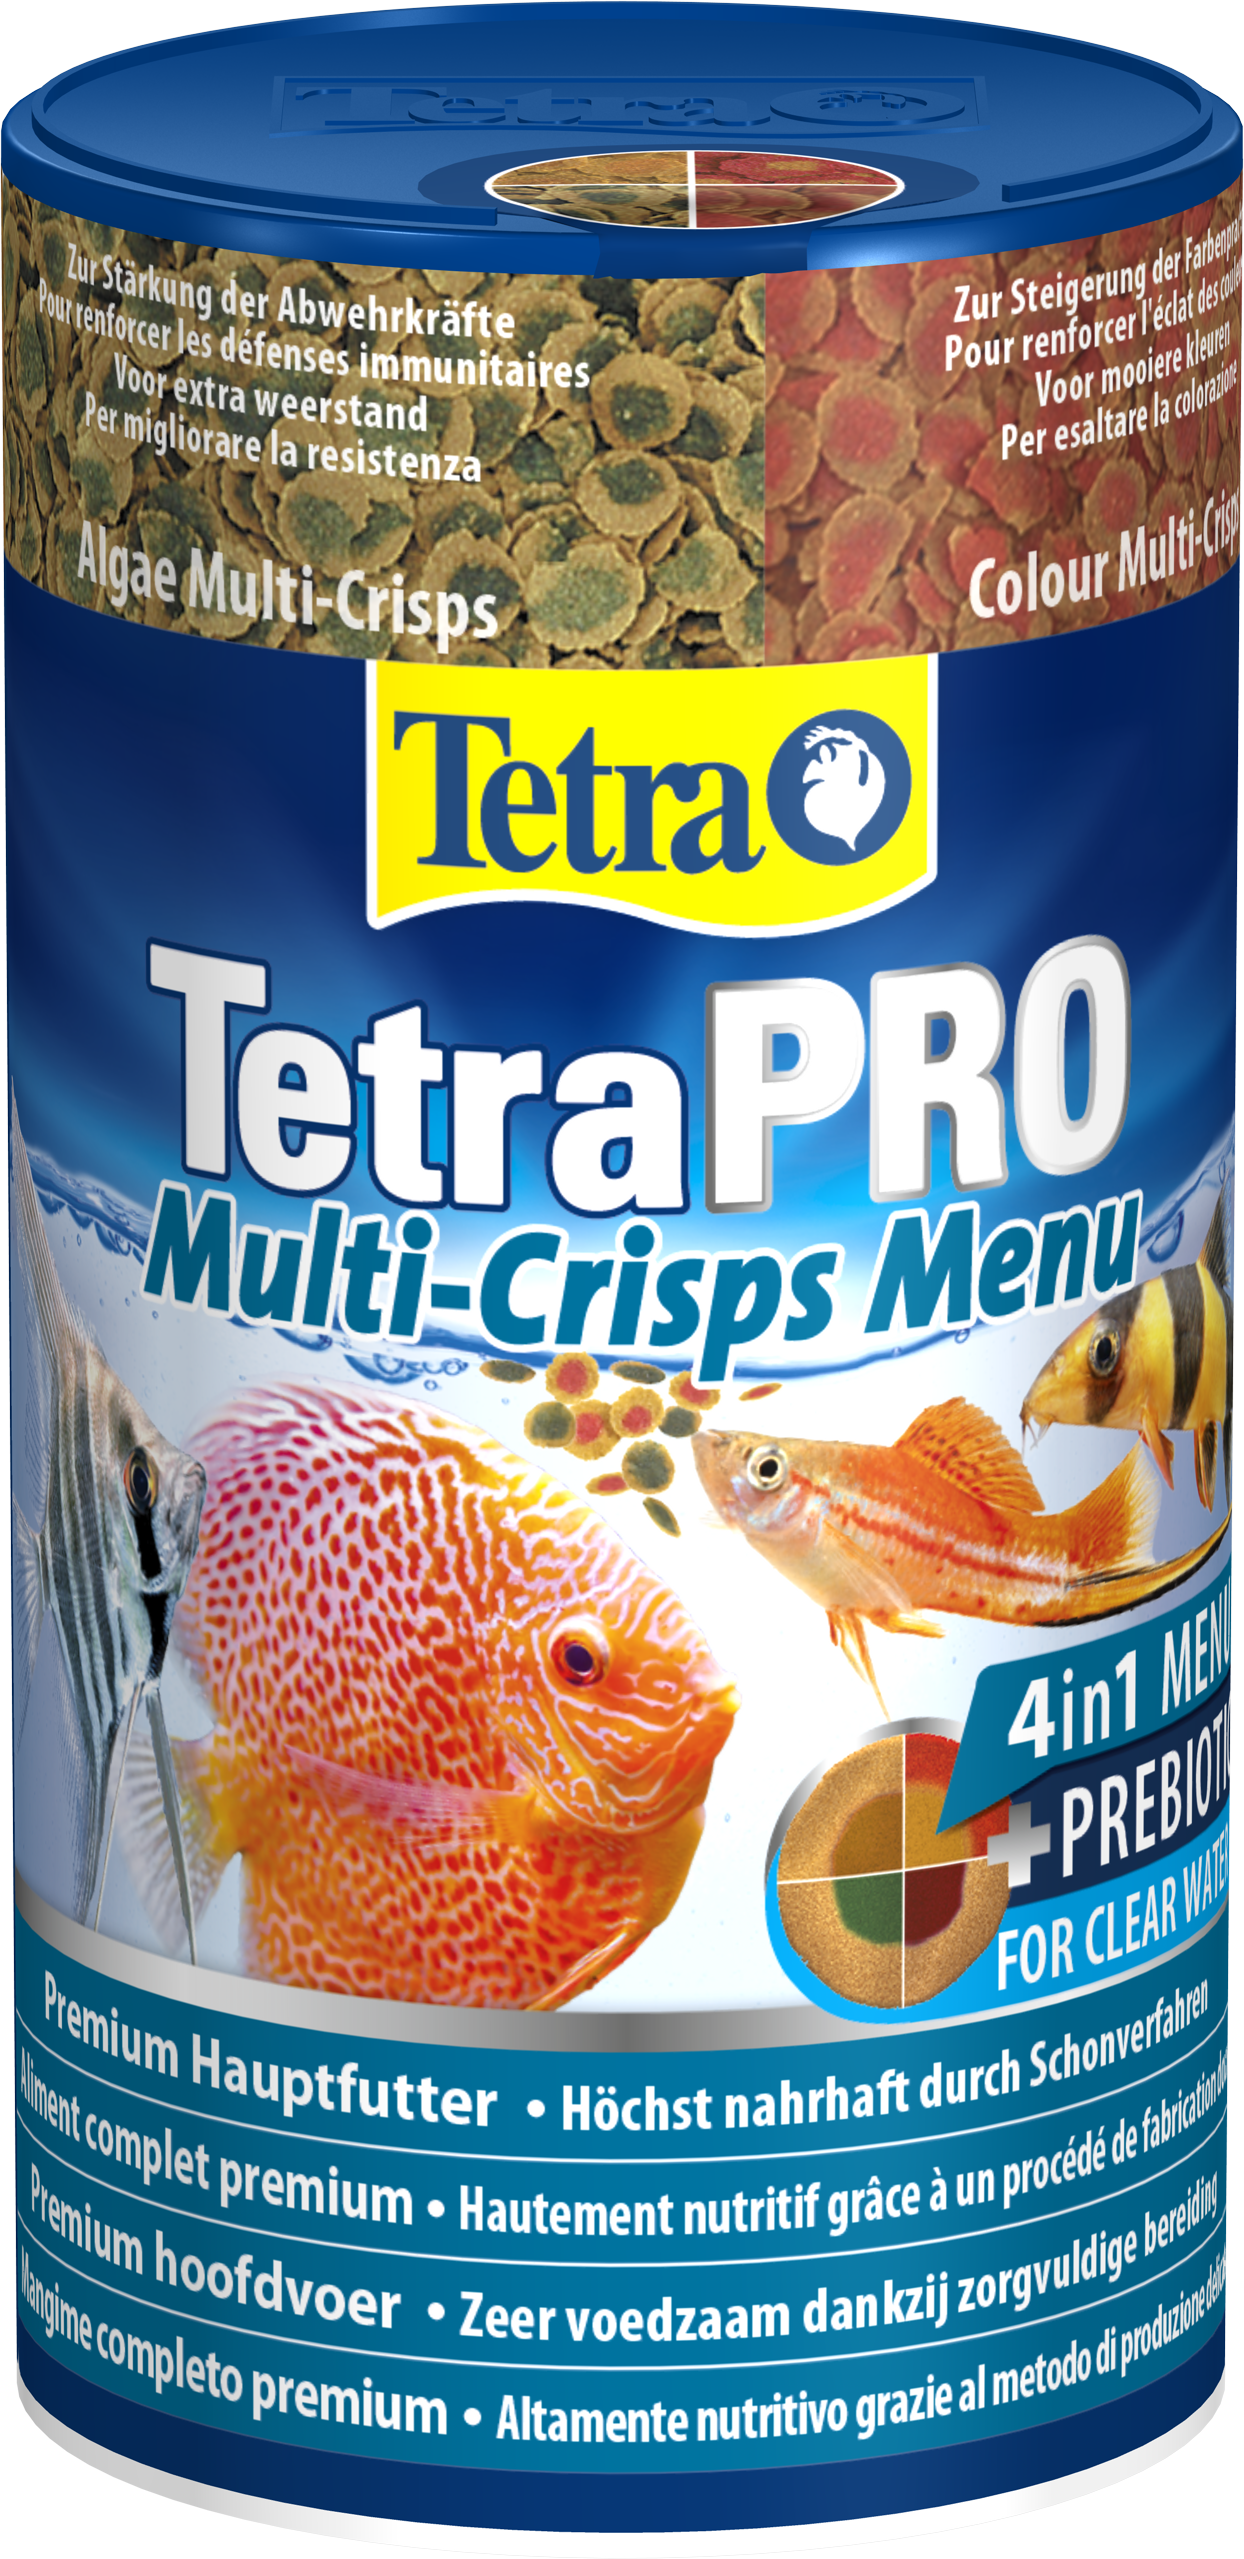 TETRA TetraPro Energy Multi-Crisps 500ml Pokarm 8863288030